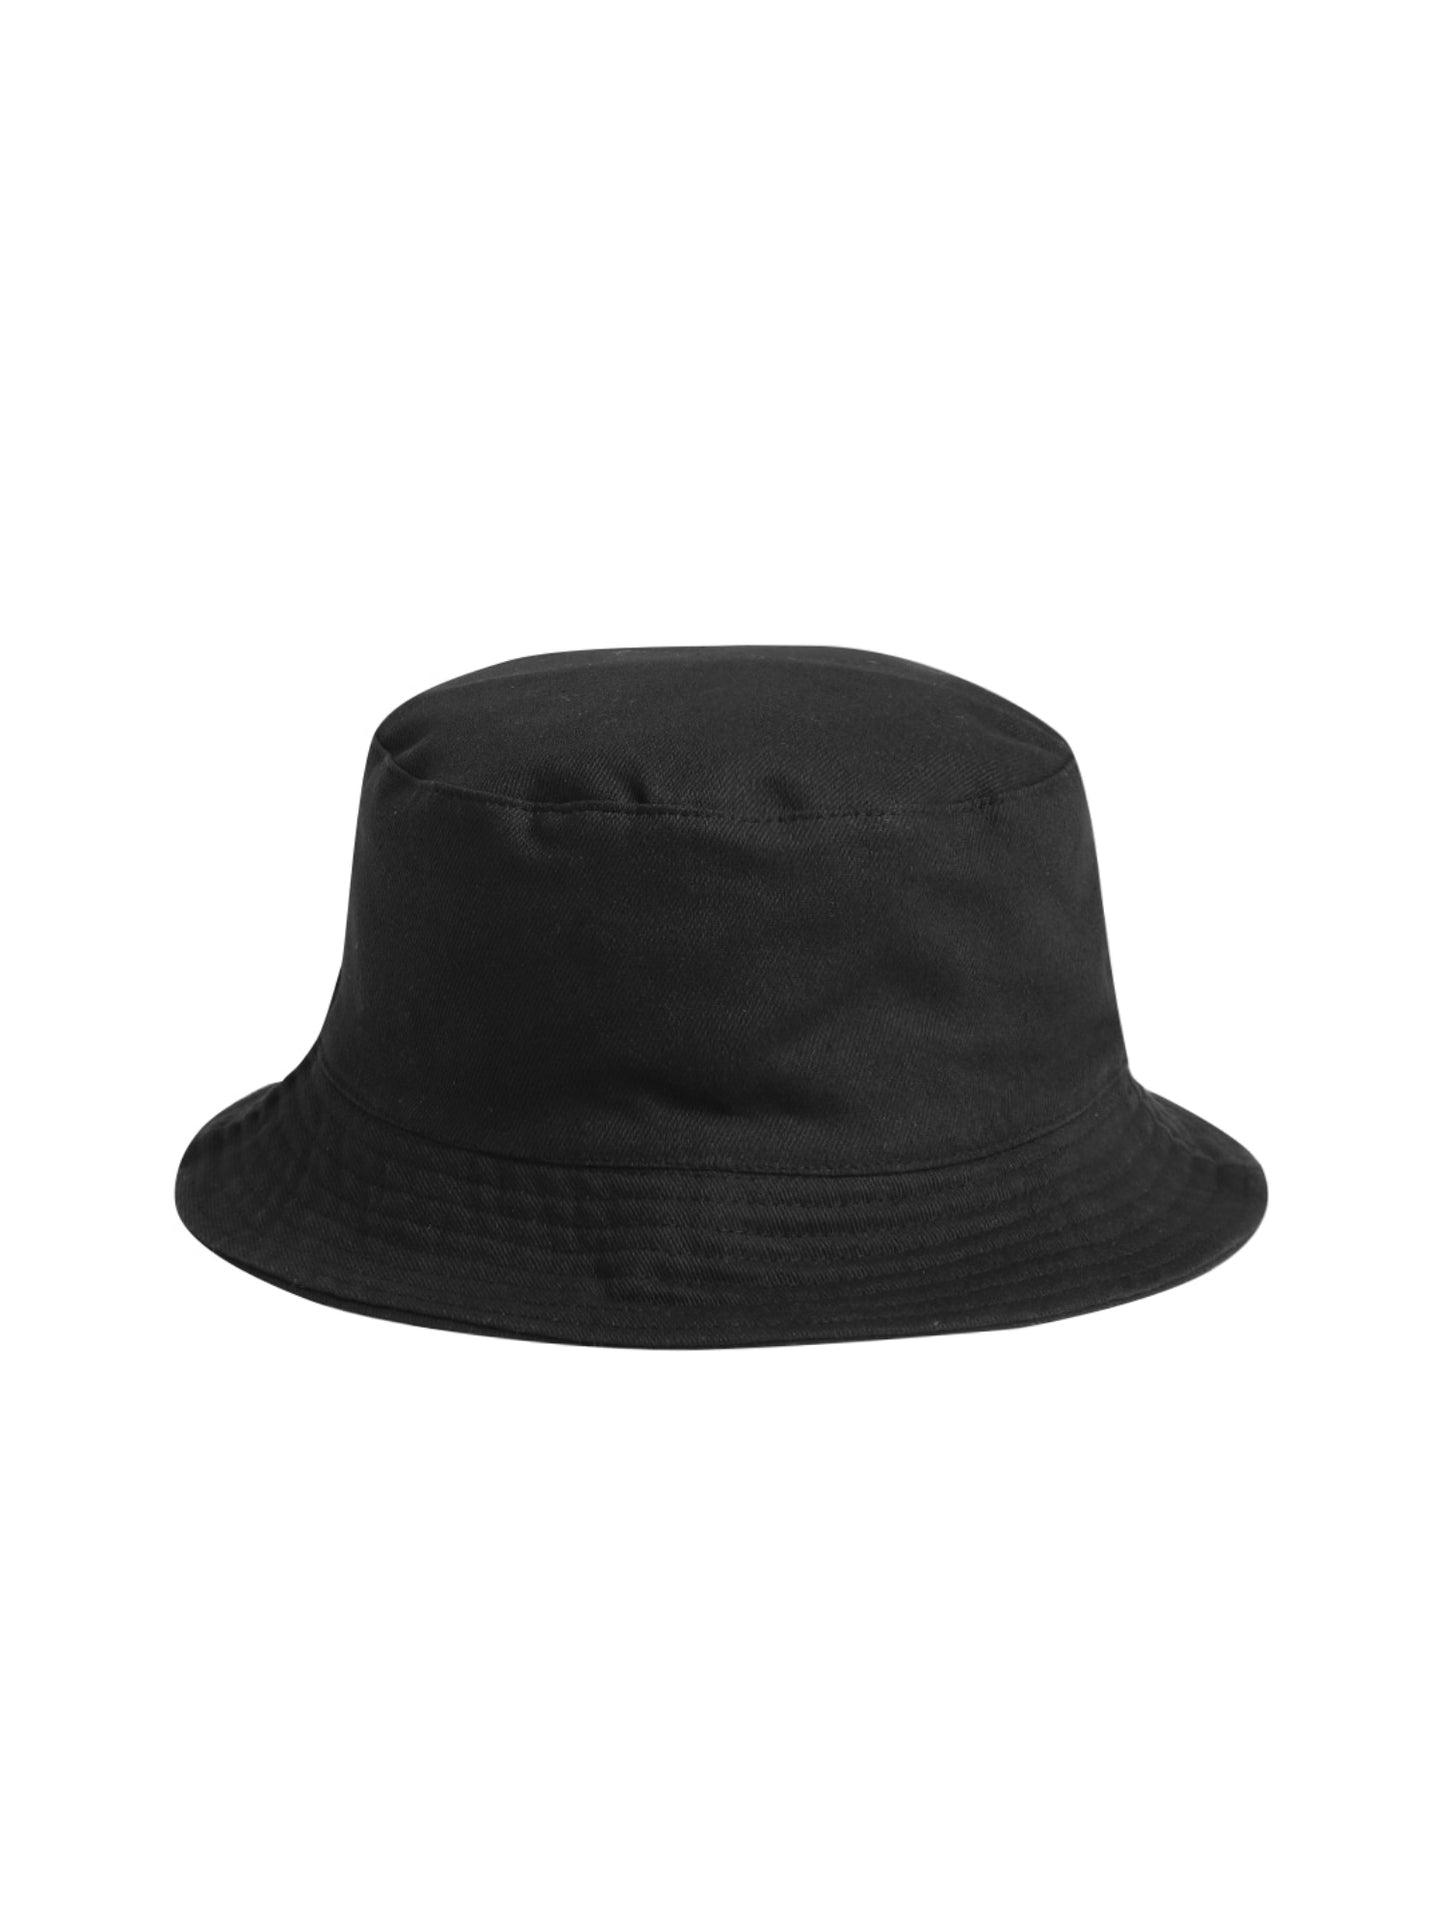 Blueberry Black Bucket Hat